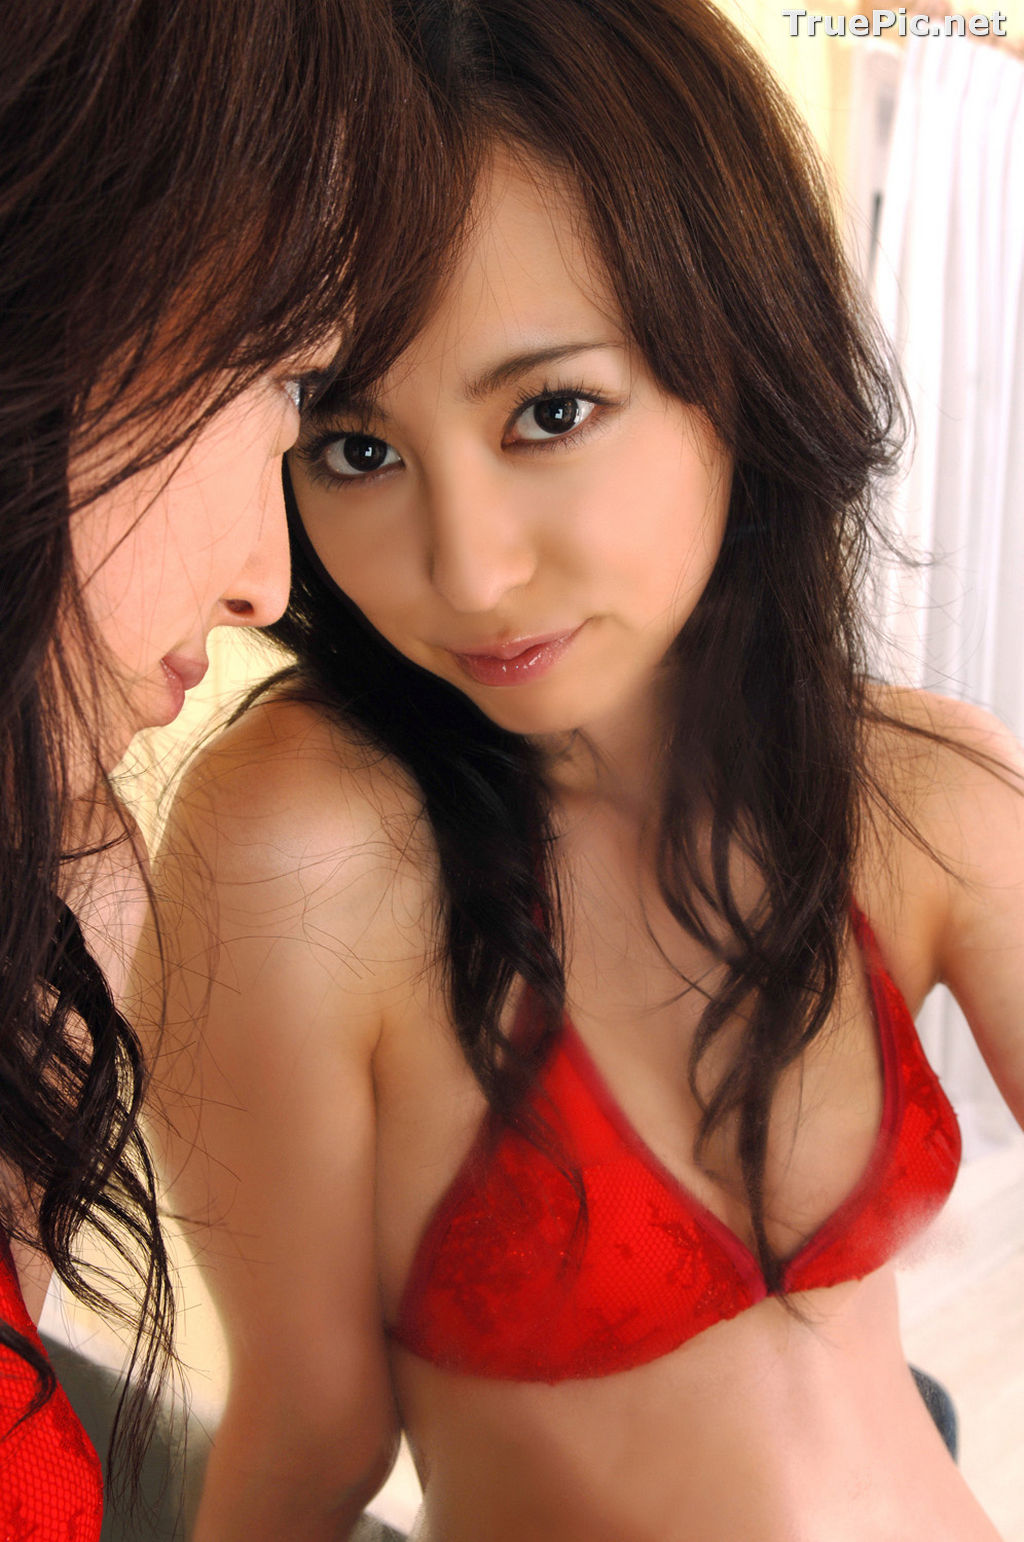 Image DGC No.354 - Japanese Actress and Gravure Idol - Rina Akiyama - TruePic.net - Picture-49